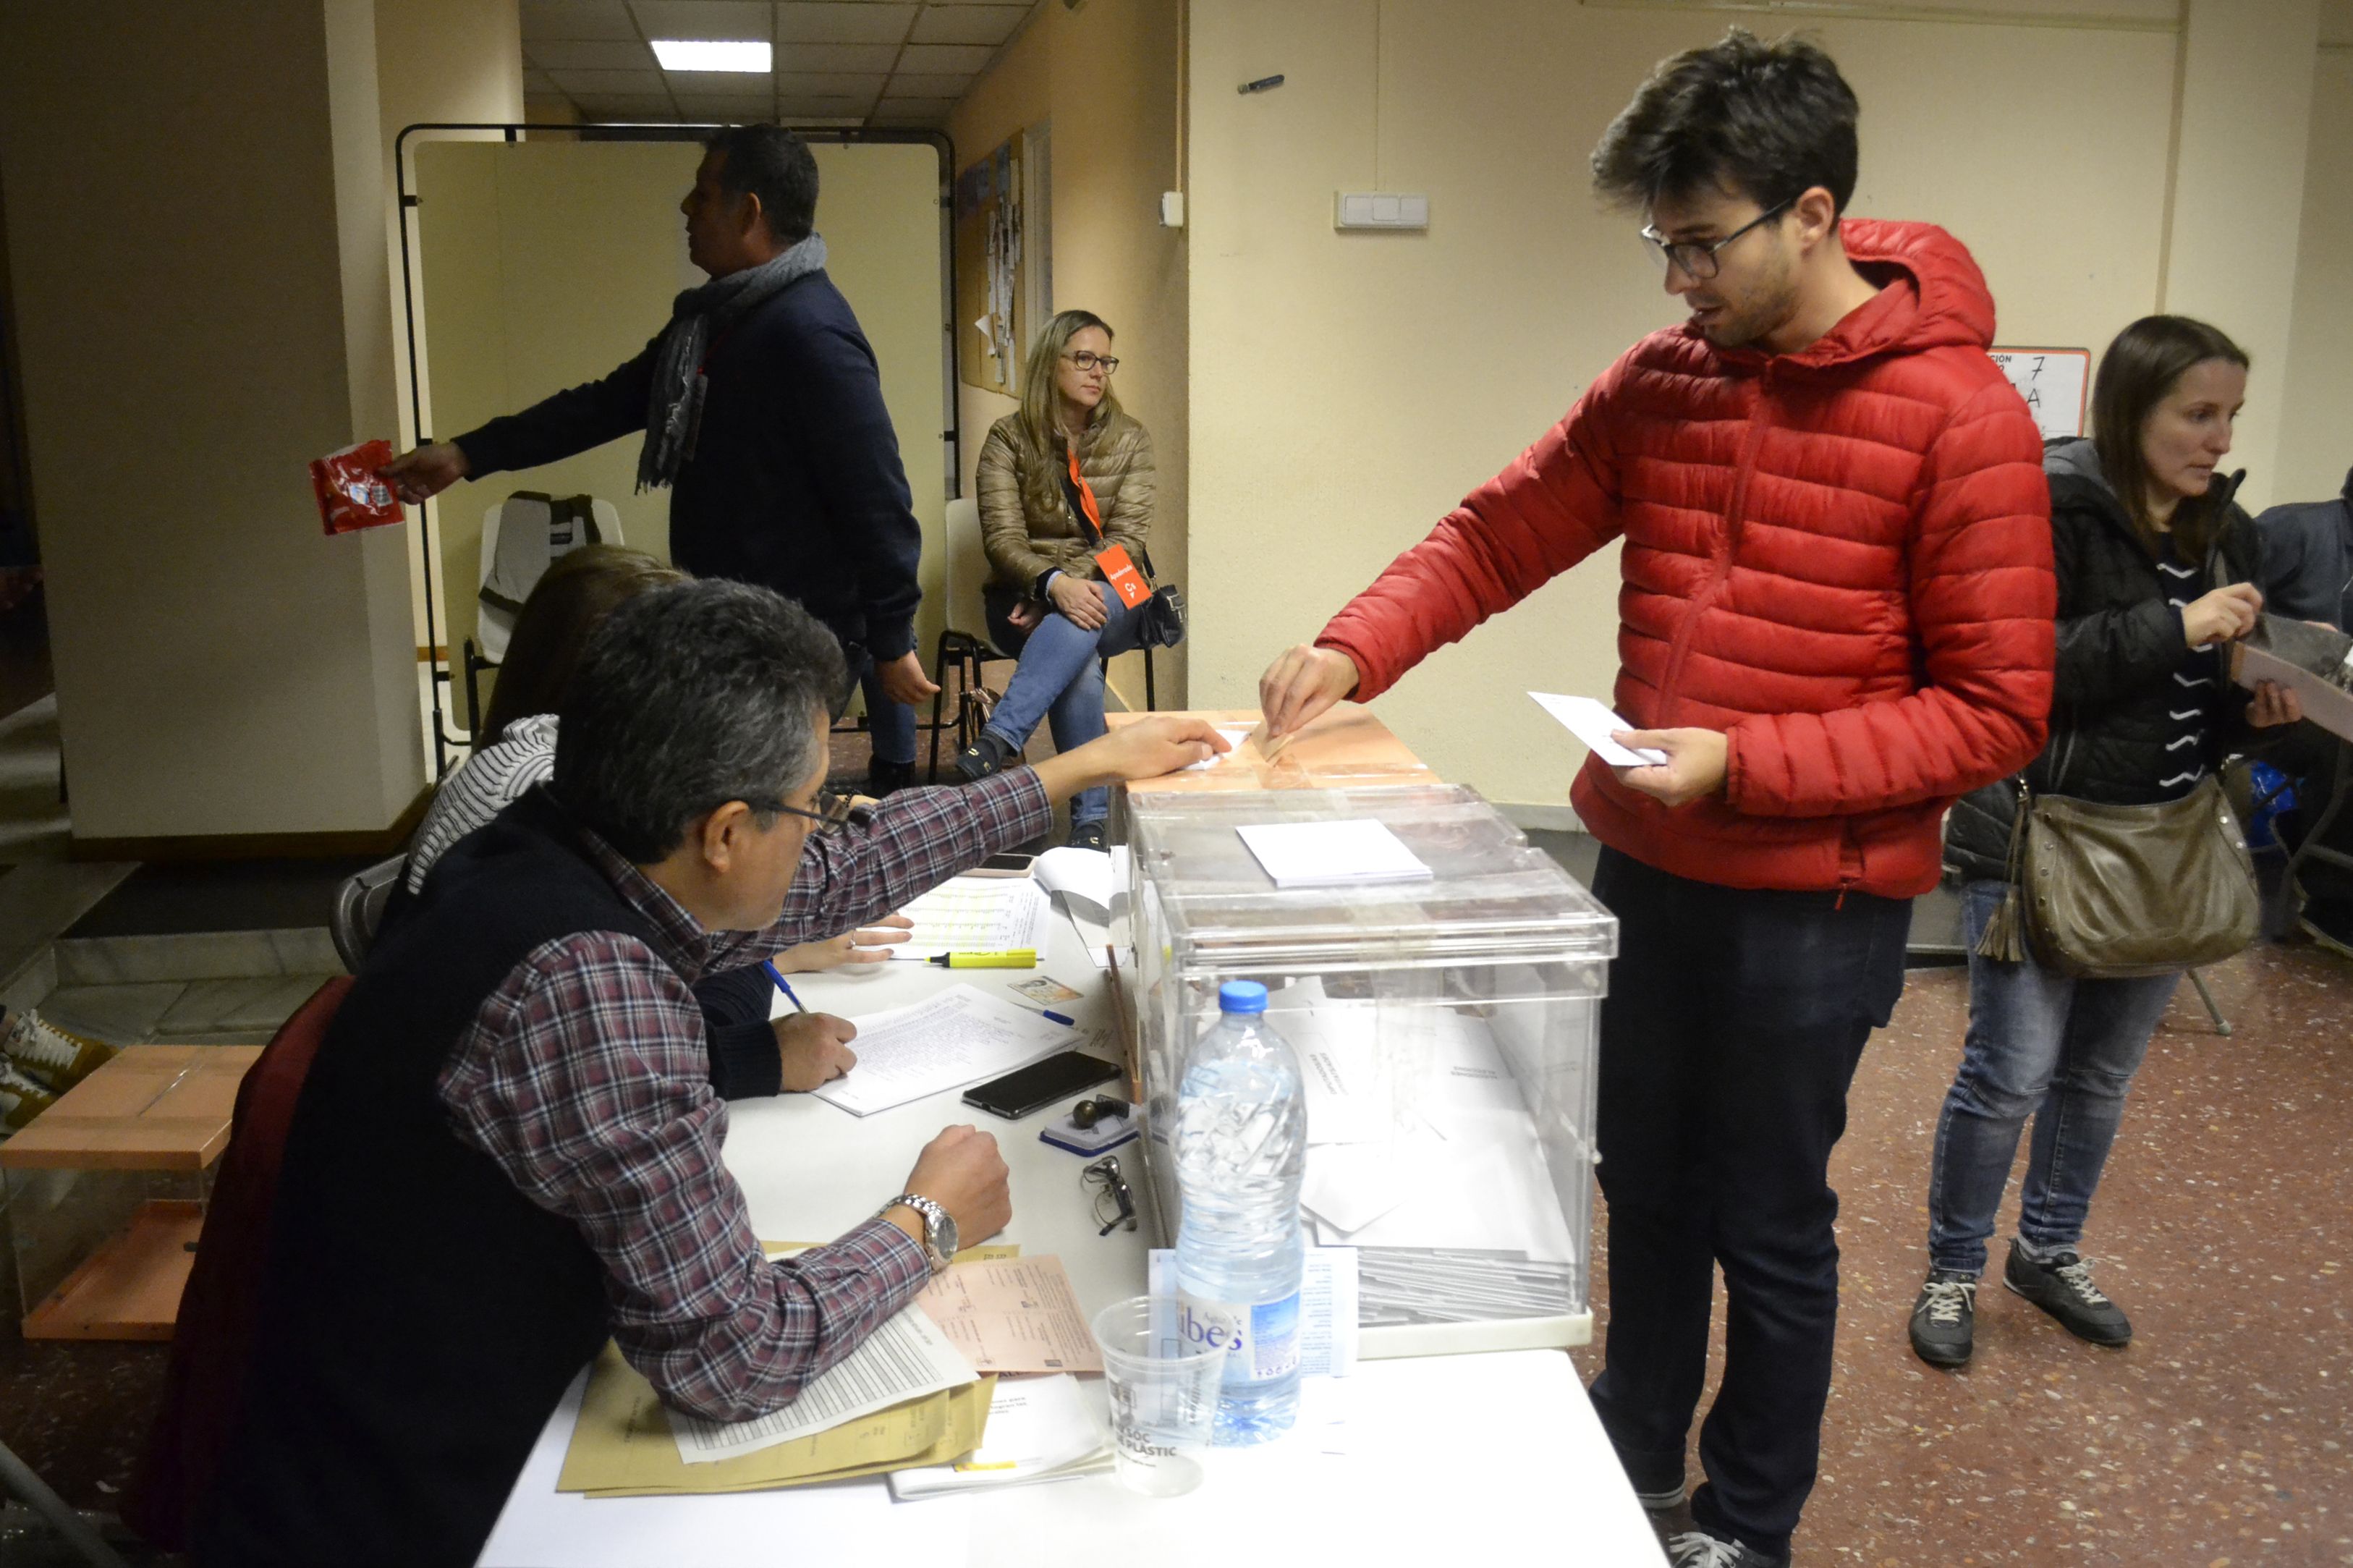  Eleccions generals Rubí 10-N. FOTO: Marcel Marsal